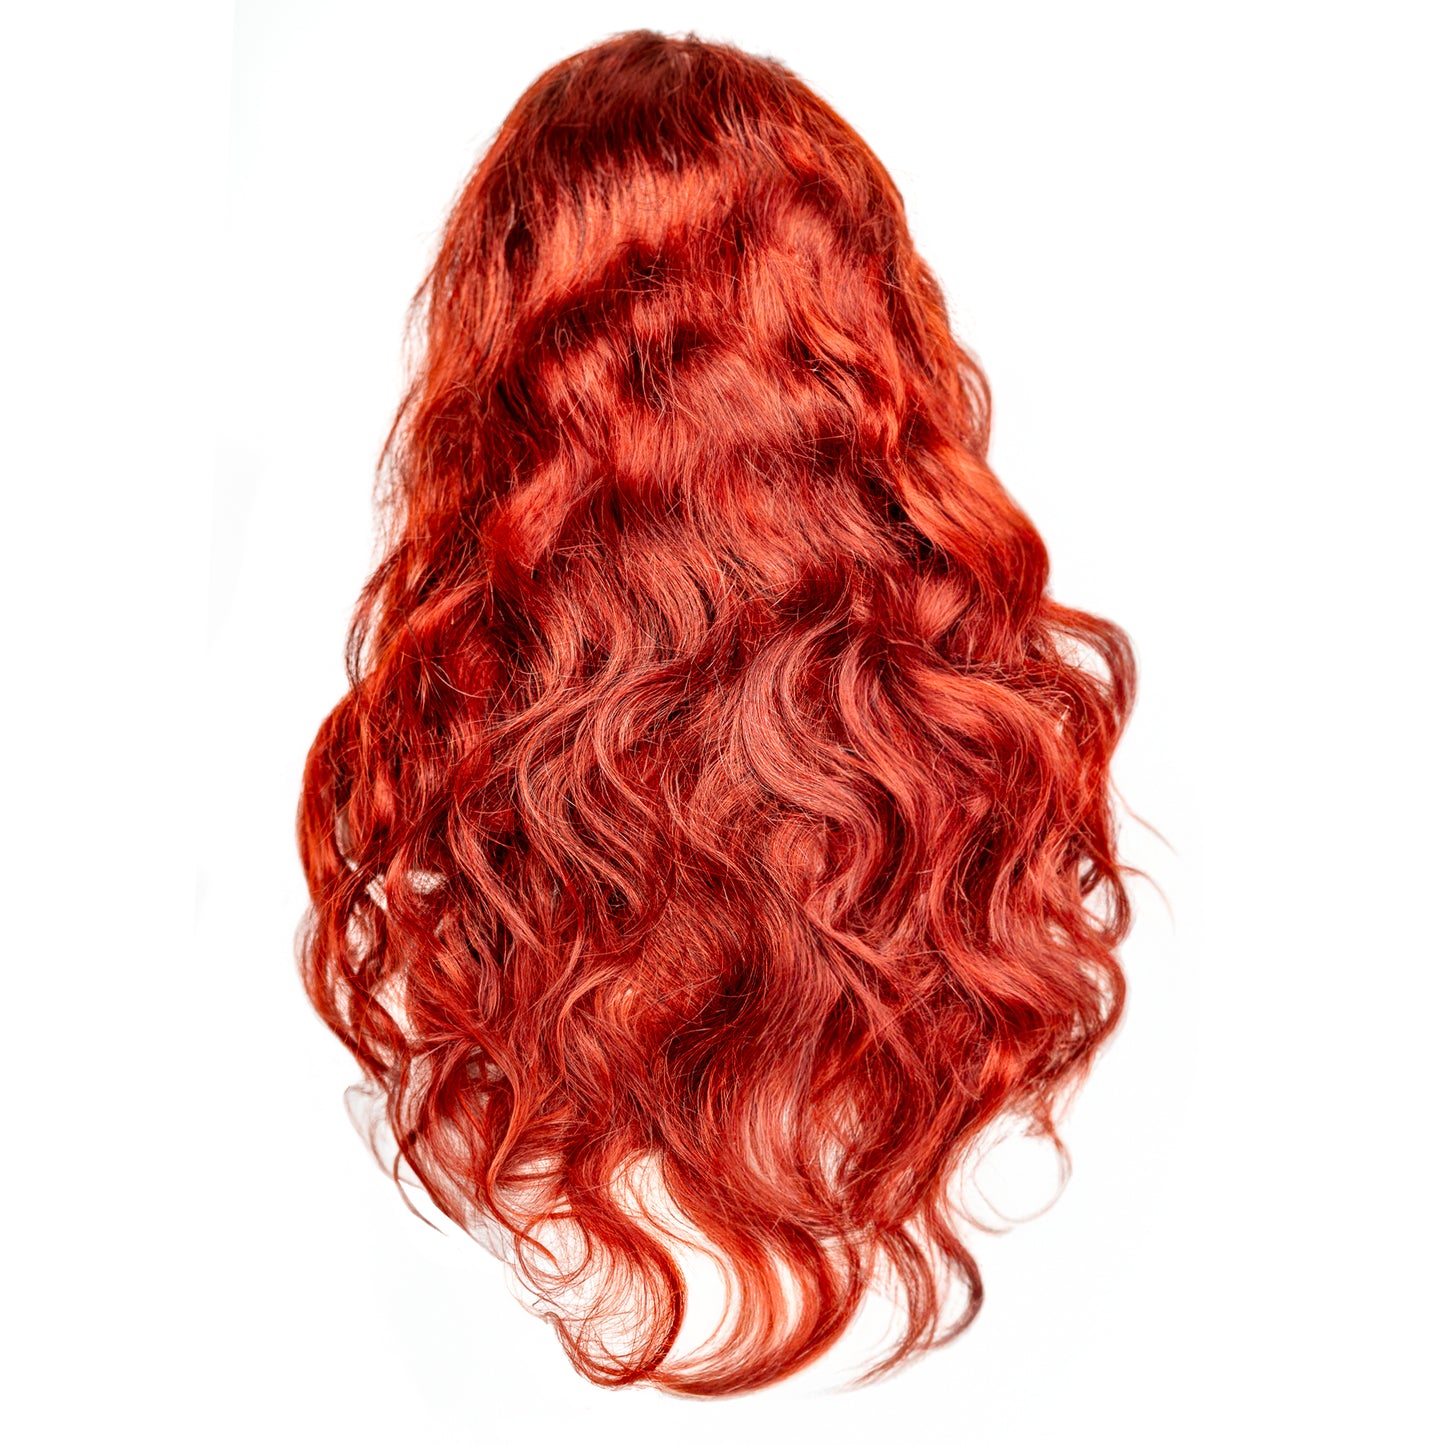 Cloud 9 13x4 Glueless Wigs HD Lace Front Pre Plucked, Pre-Cut, Brazilian Virgin Human Hair Natural Body Wave